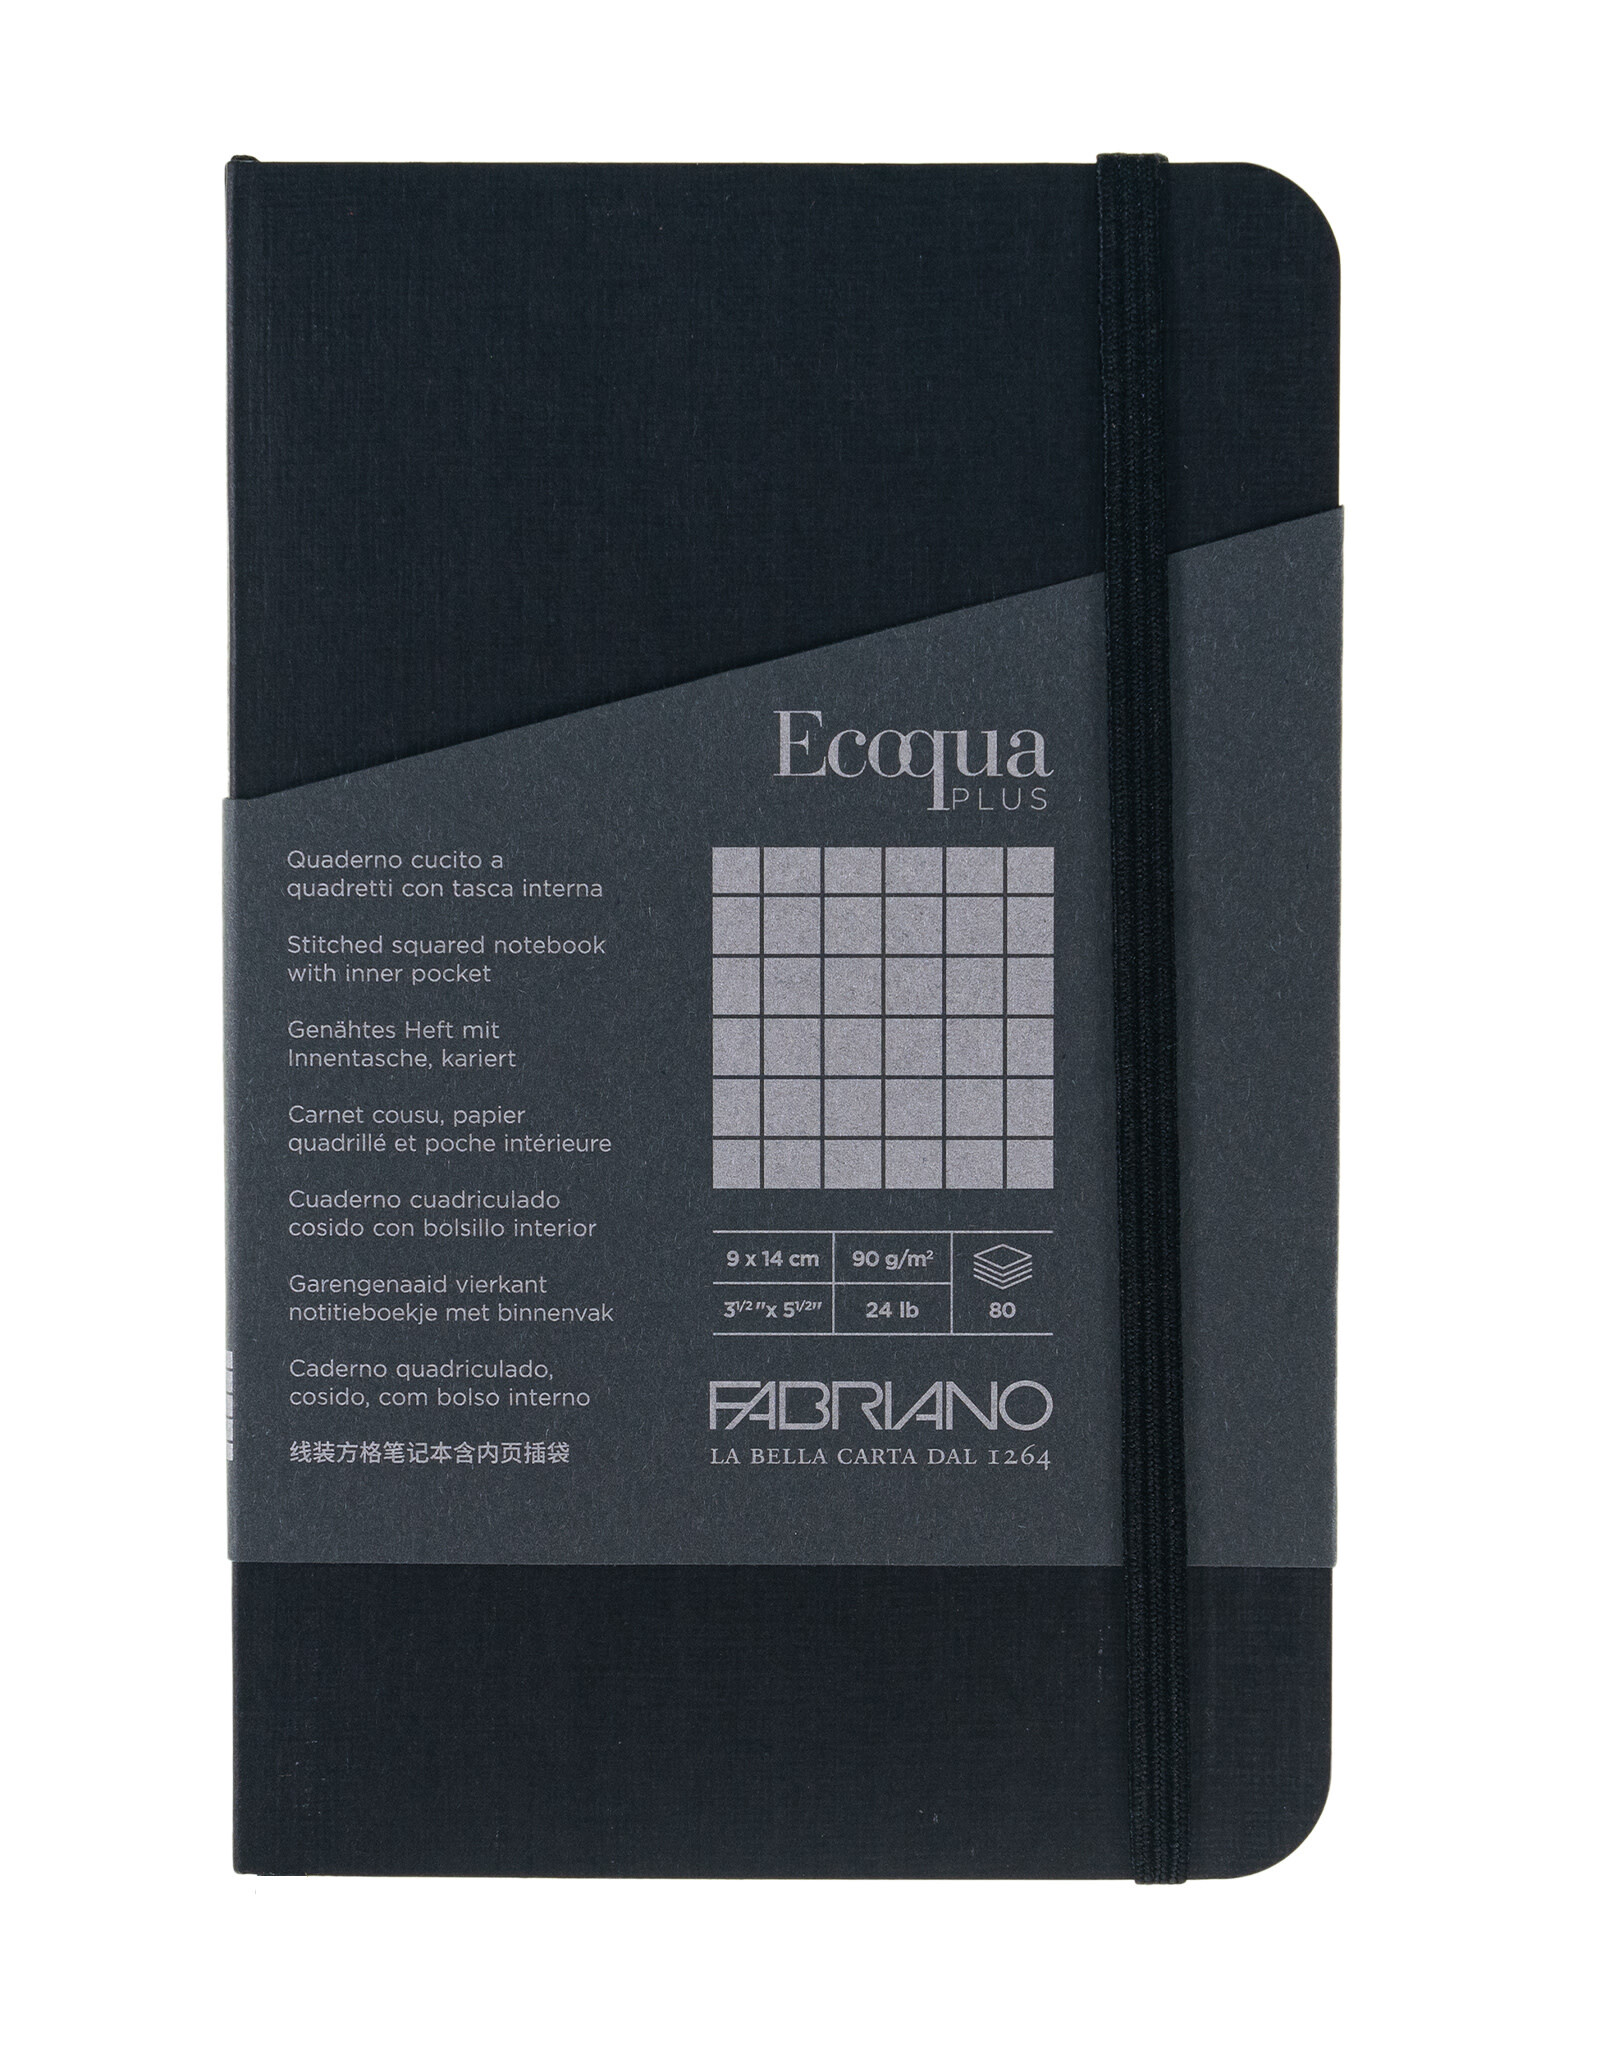 Ecoqua Plus Sewn Spine Notebook, Black, 3.5” x 5.5”, Graphed